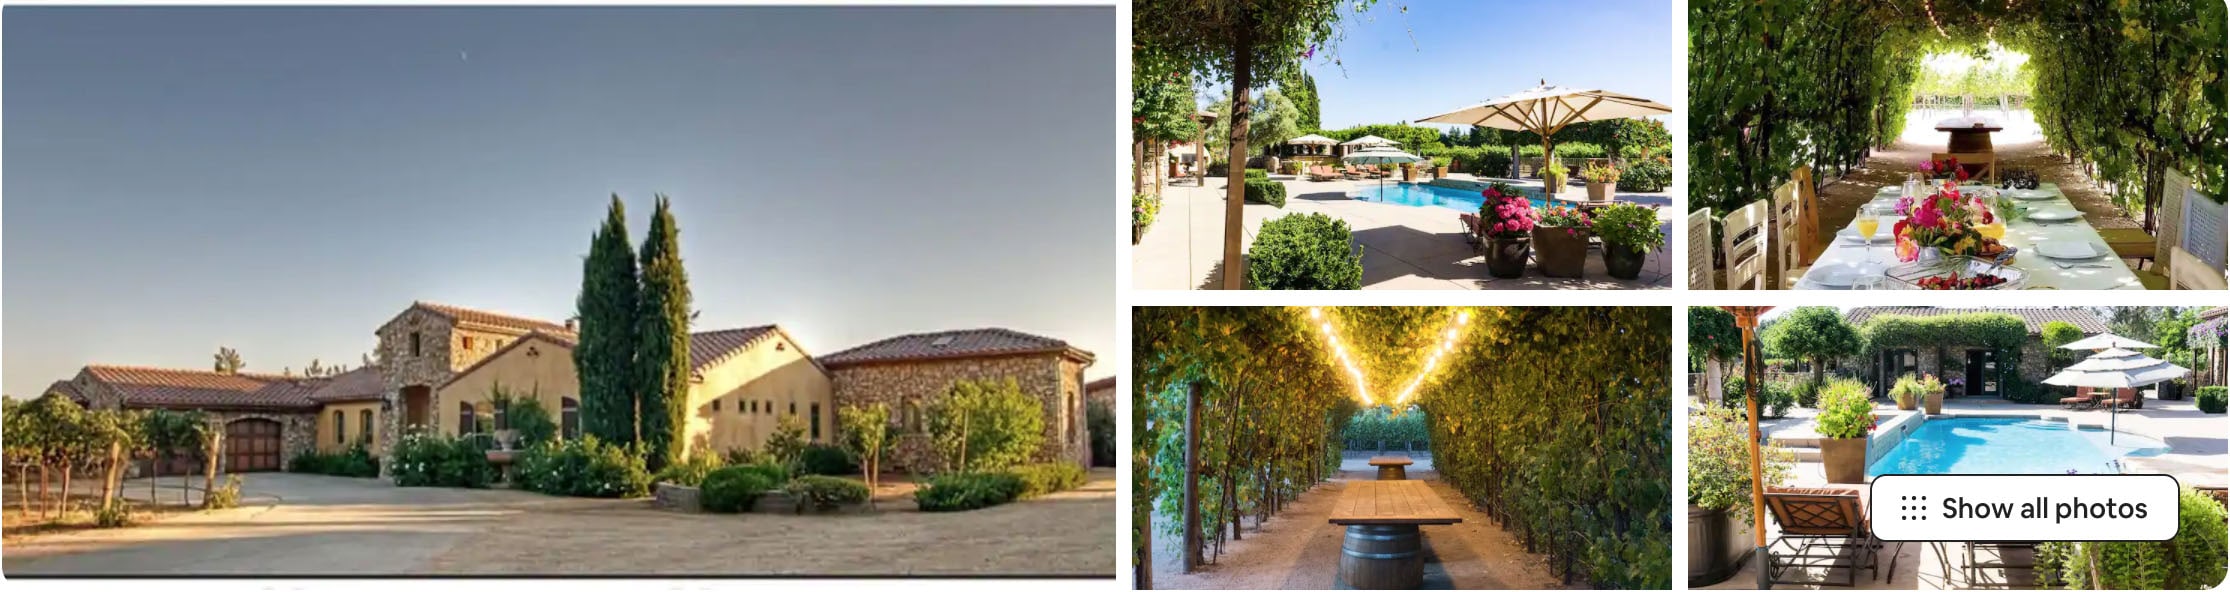 Northern California Airbnb wedding venue Villa Riposo